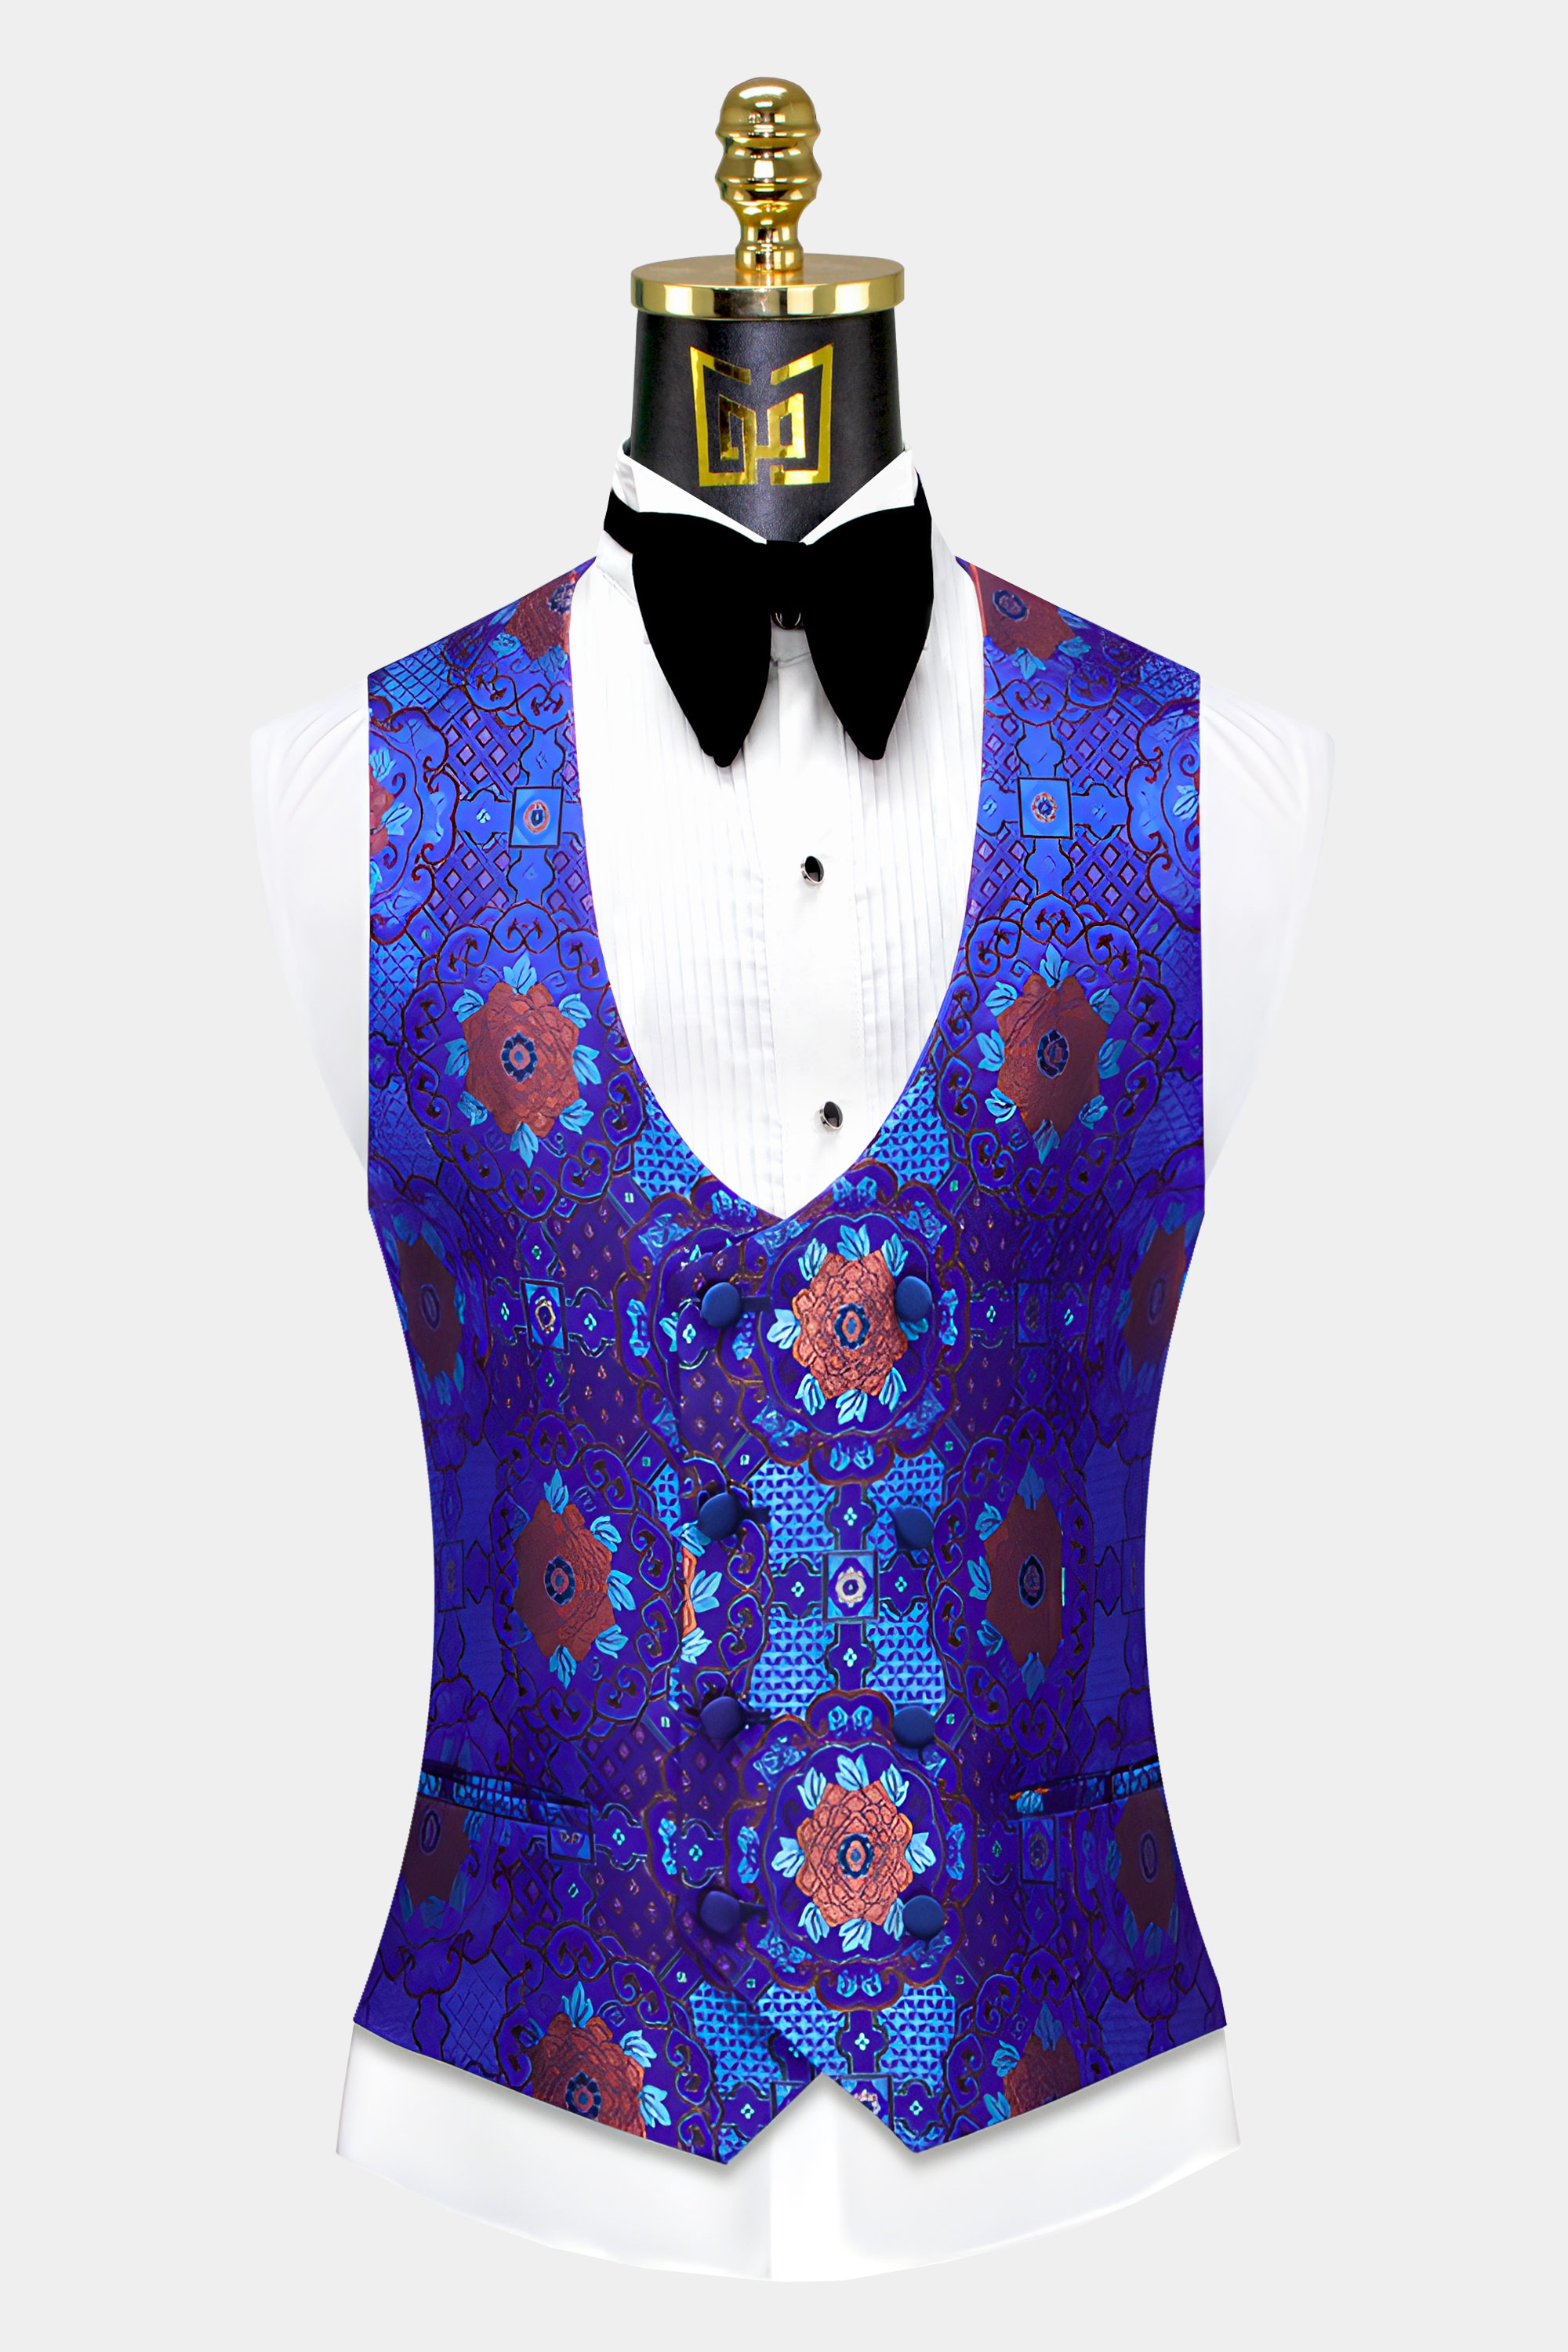 Royal-Blue-Embroidered-Tuxedo-Vest-from-Gentlemansguru.com